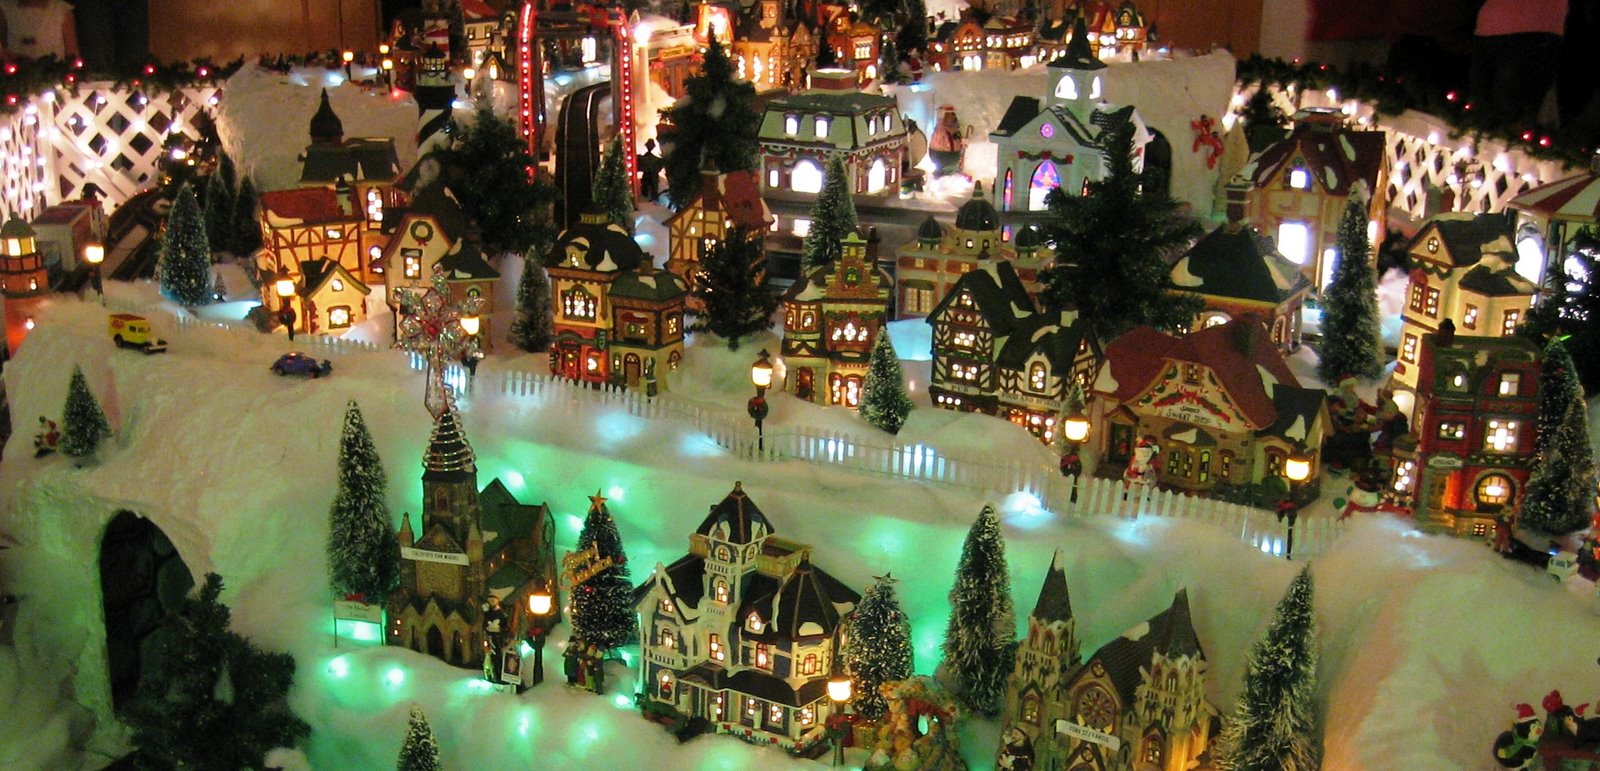 Village Displays Christmas